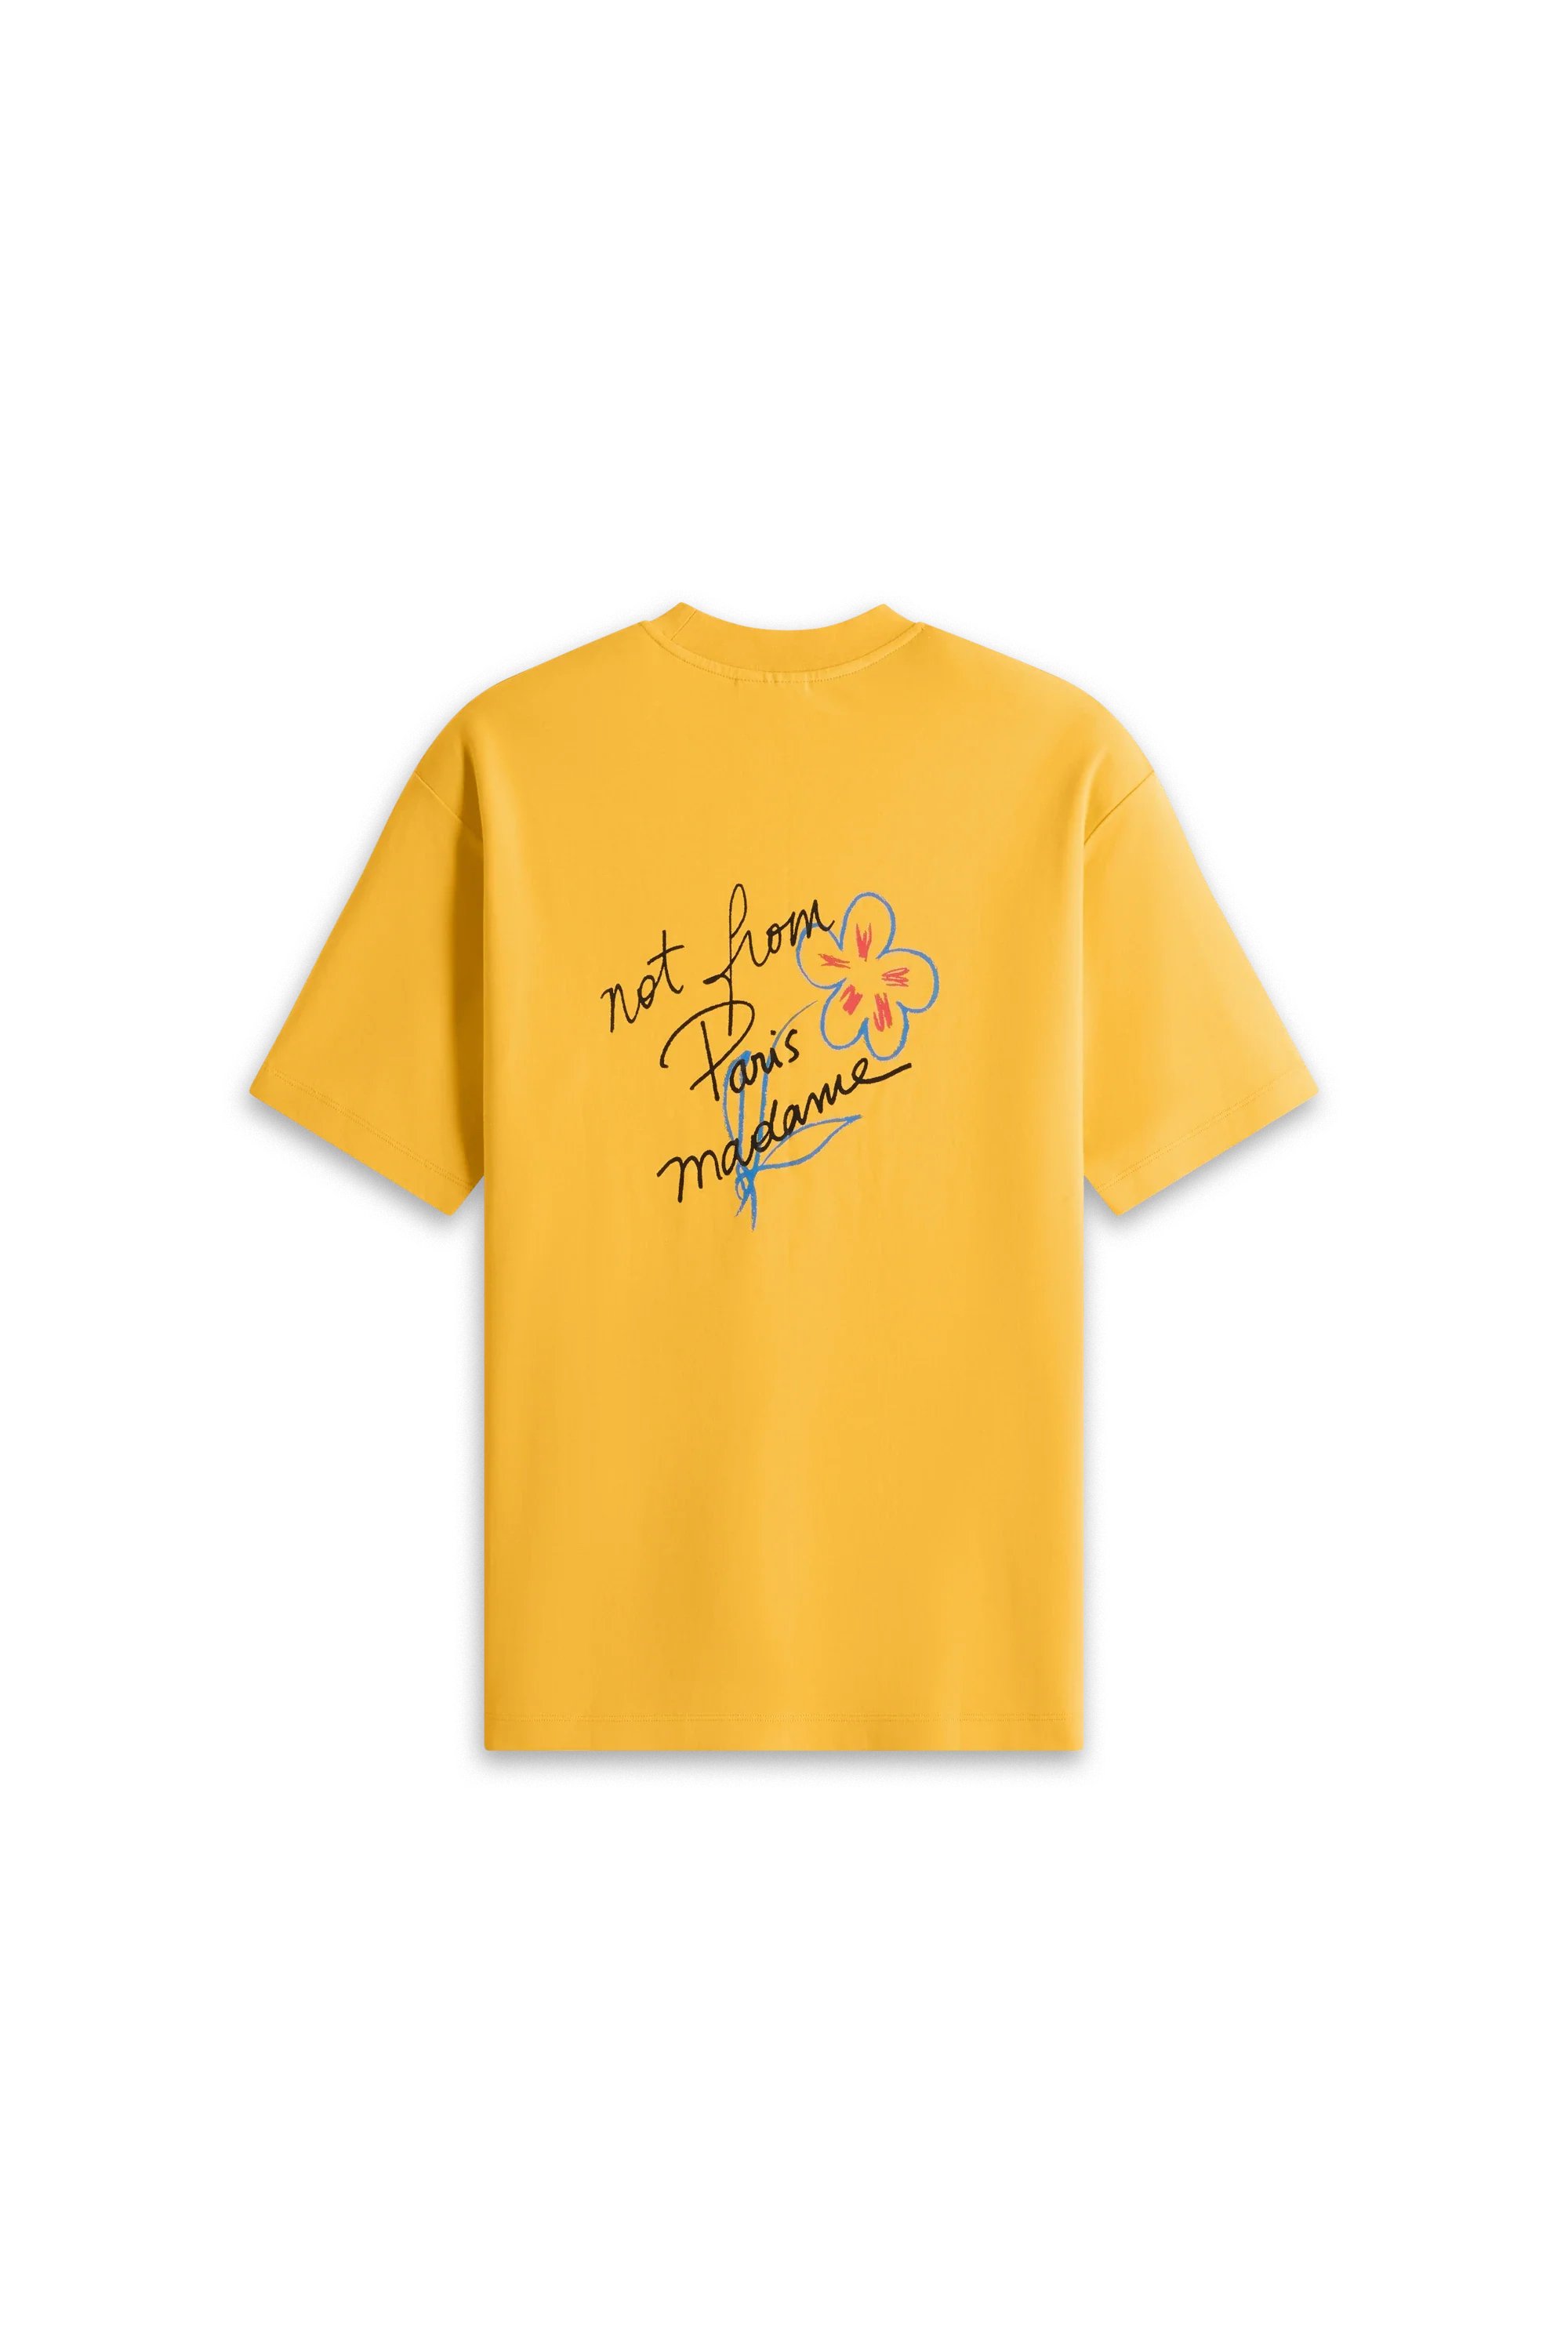 Le slogan yellow shirt.jpeg